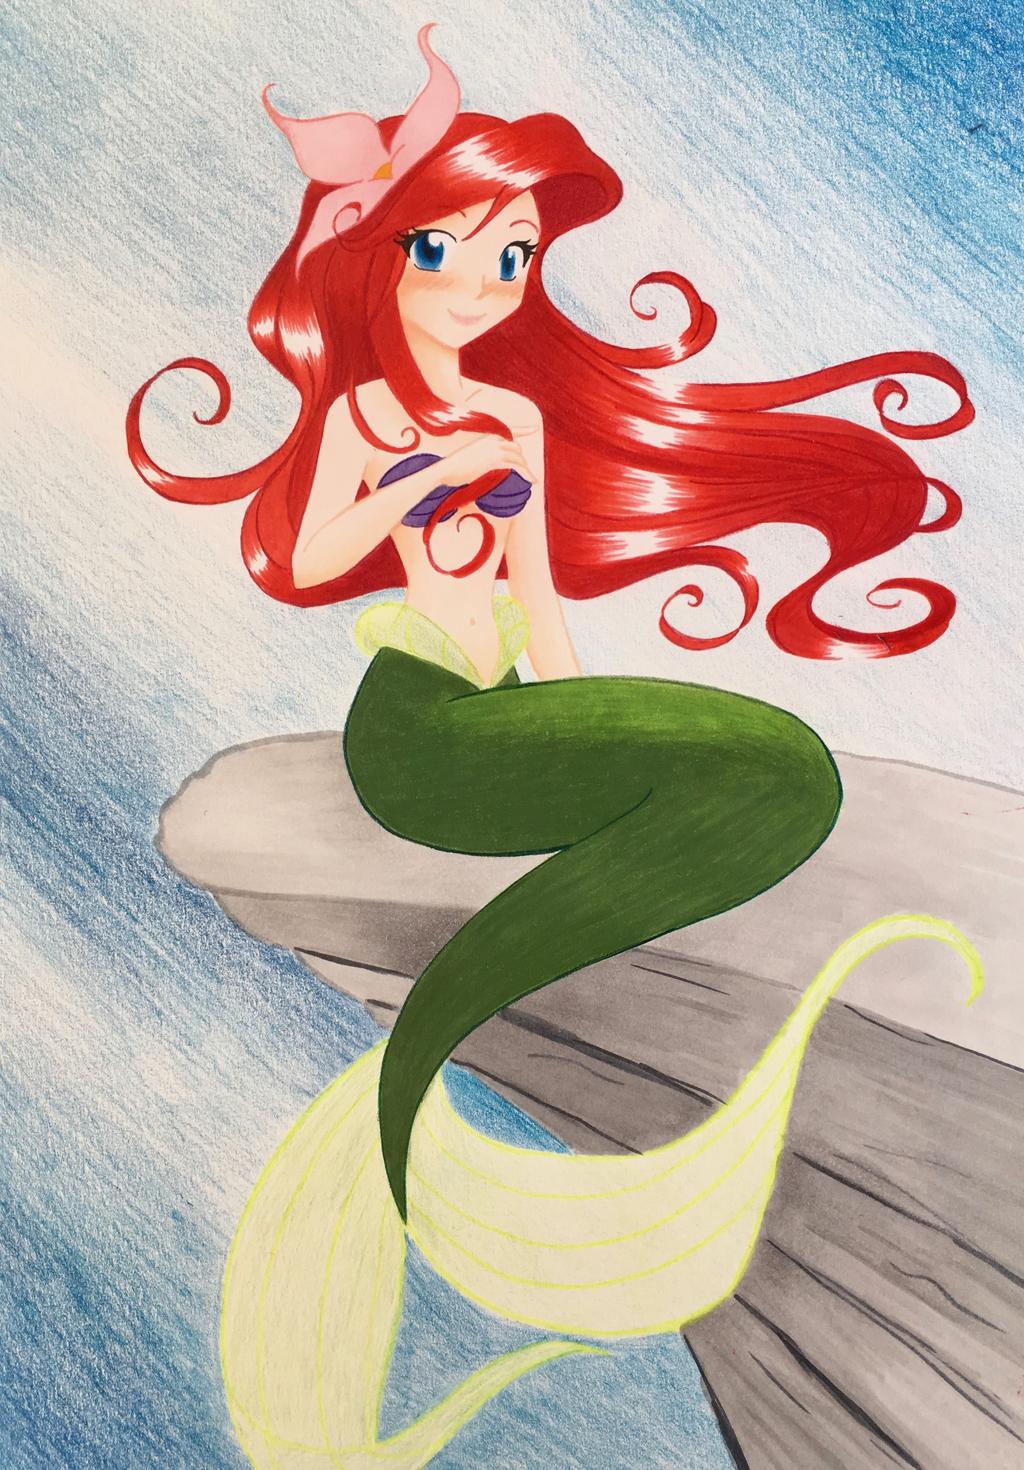 Hans Christian Andersons The Little Mermaid  AnimePlanet